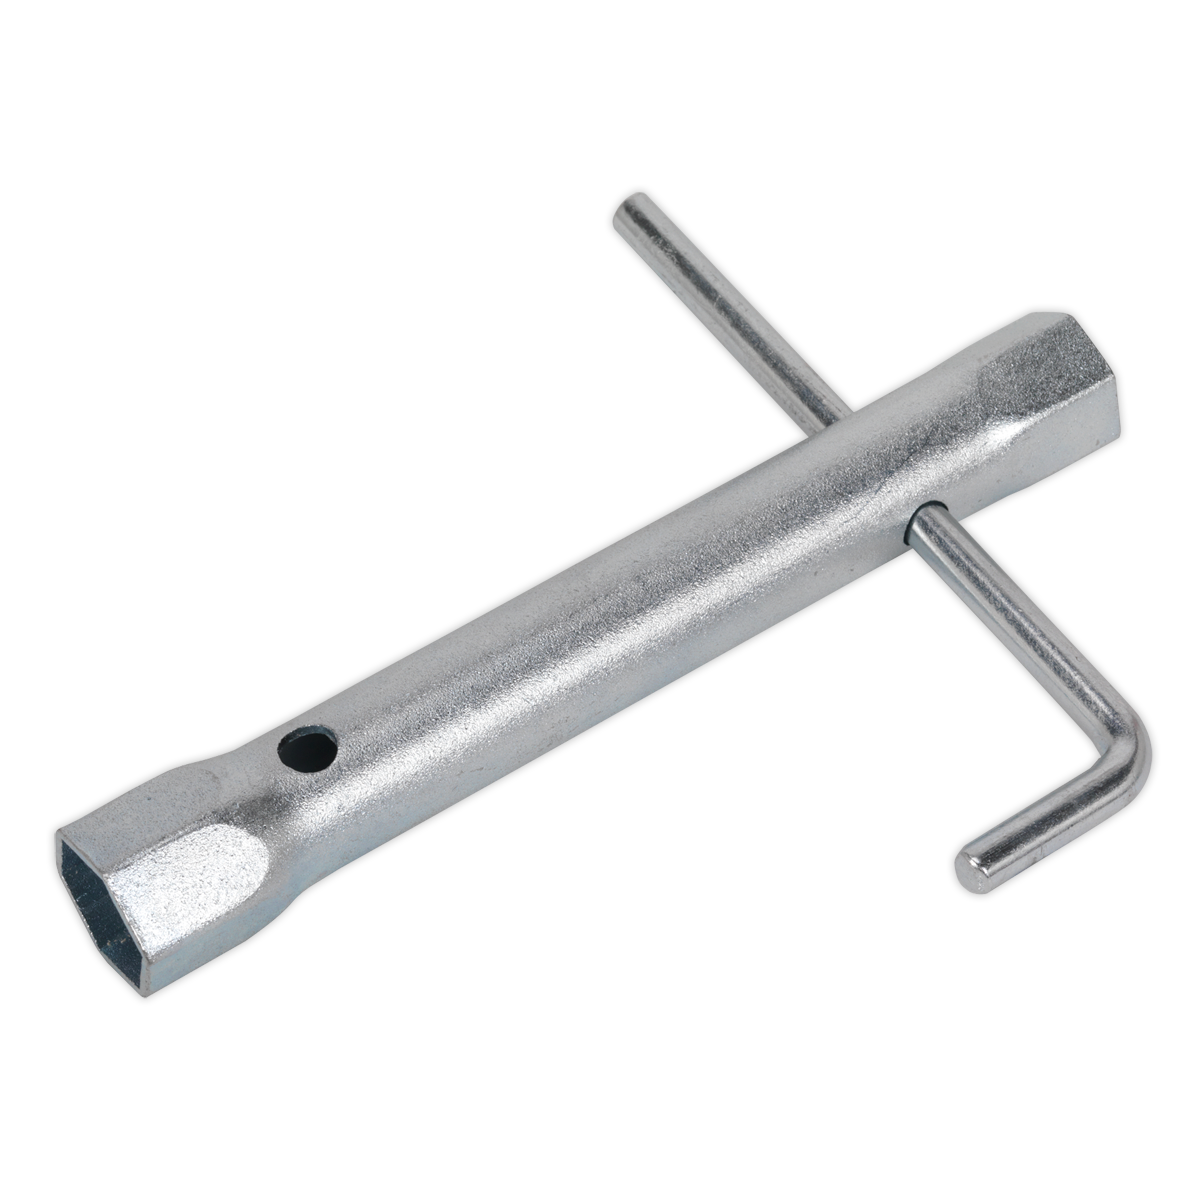 Double End Long Reach Spark Plug Box Spanner 18/21mm with L-Bar - MS161 - Farming Parts